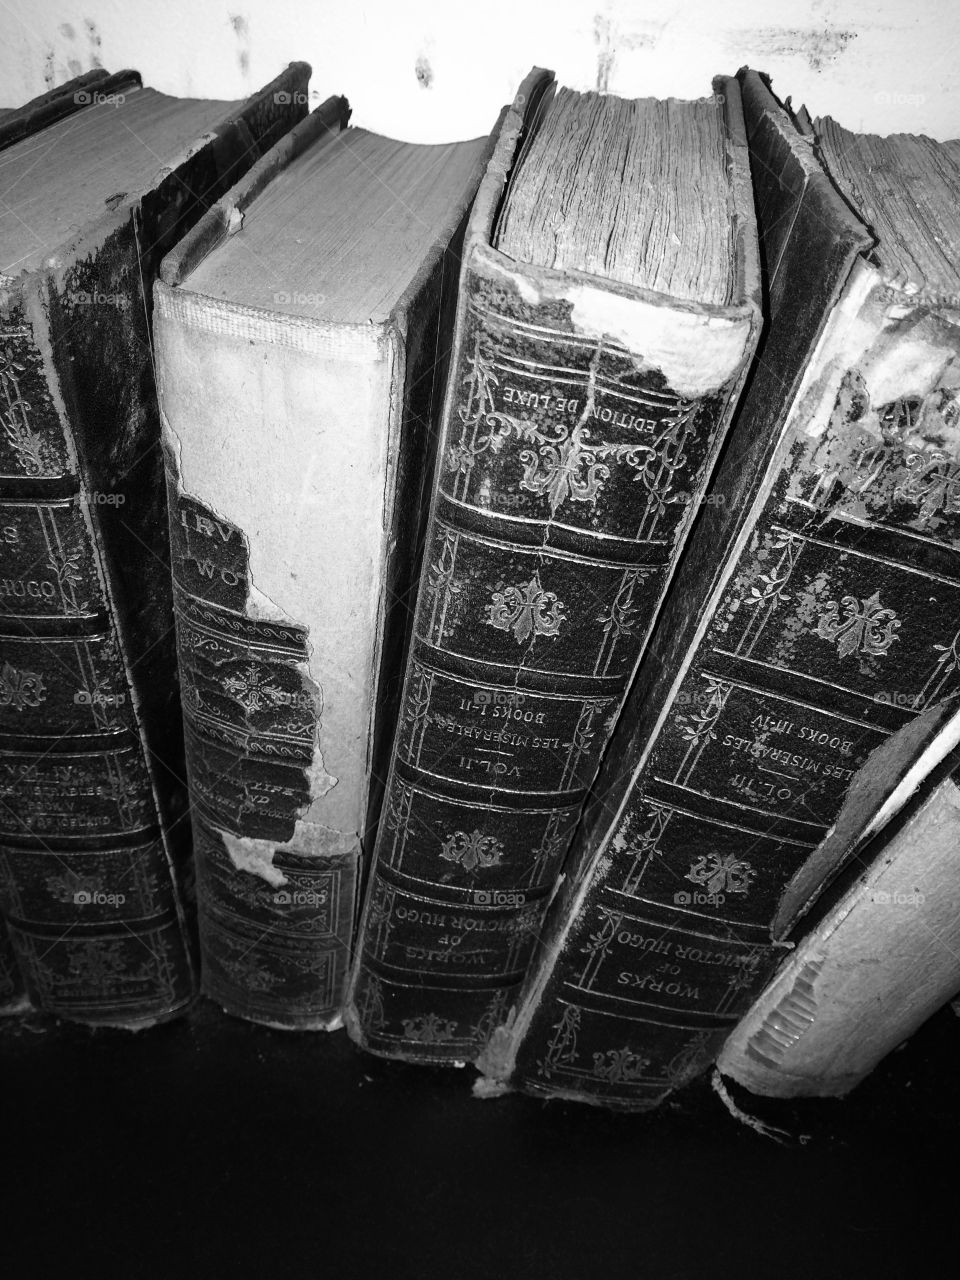 Antique books. Antique books in black and white
